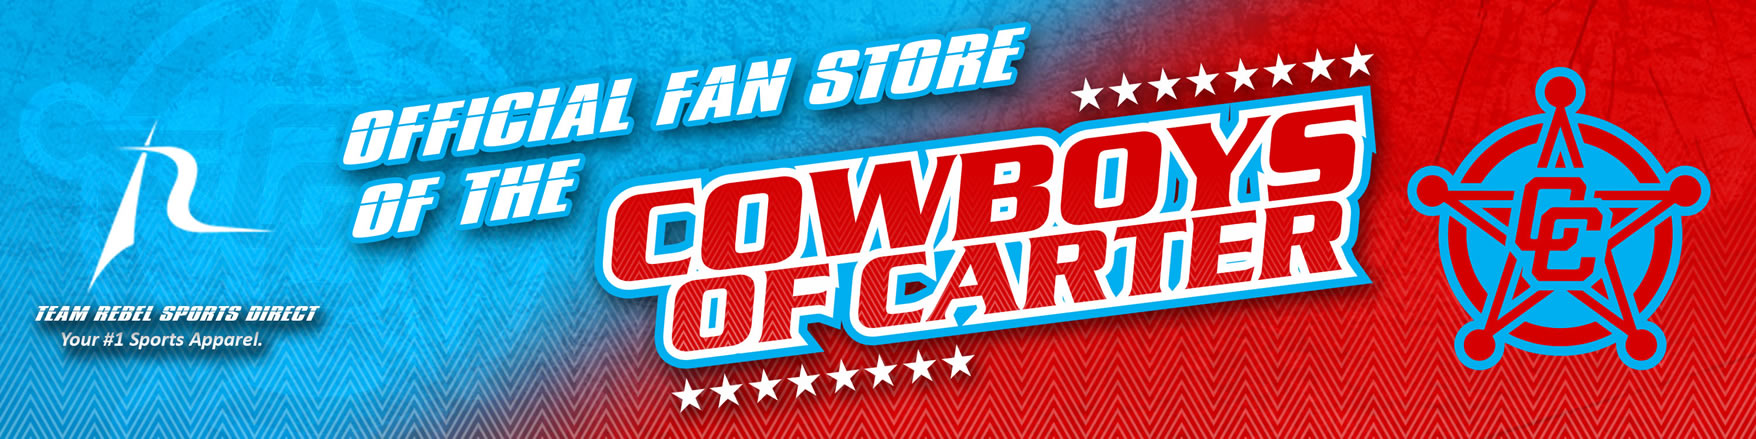 Cowboys of Carter Fan Store